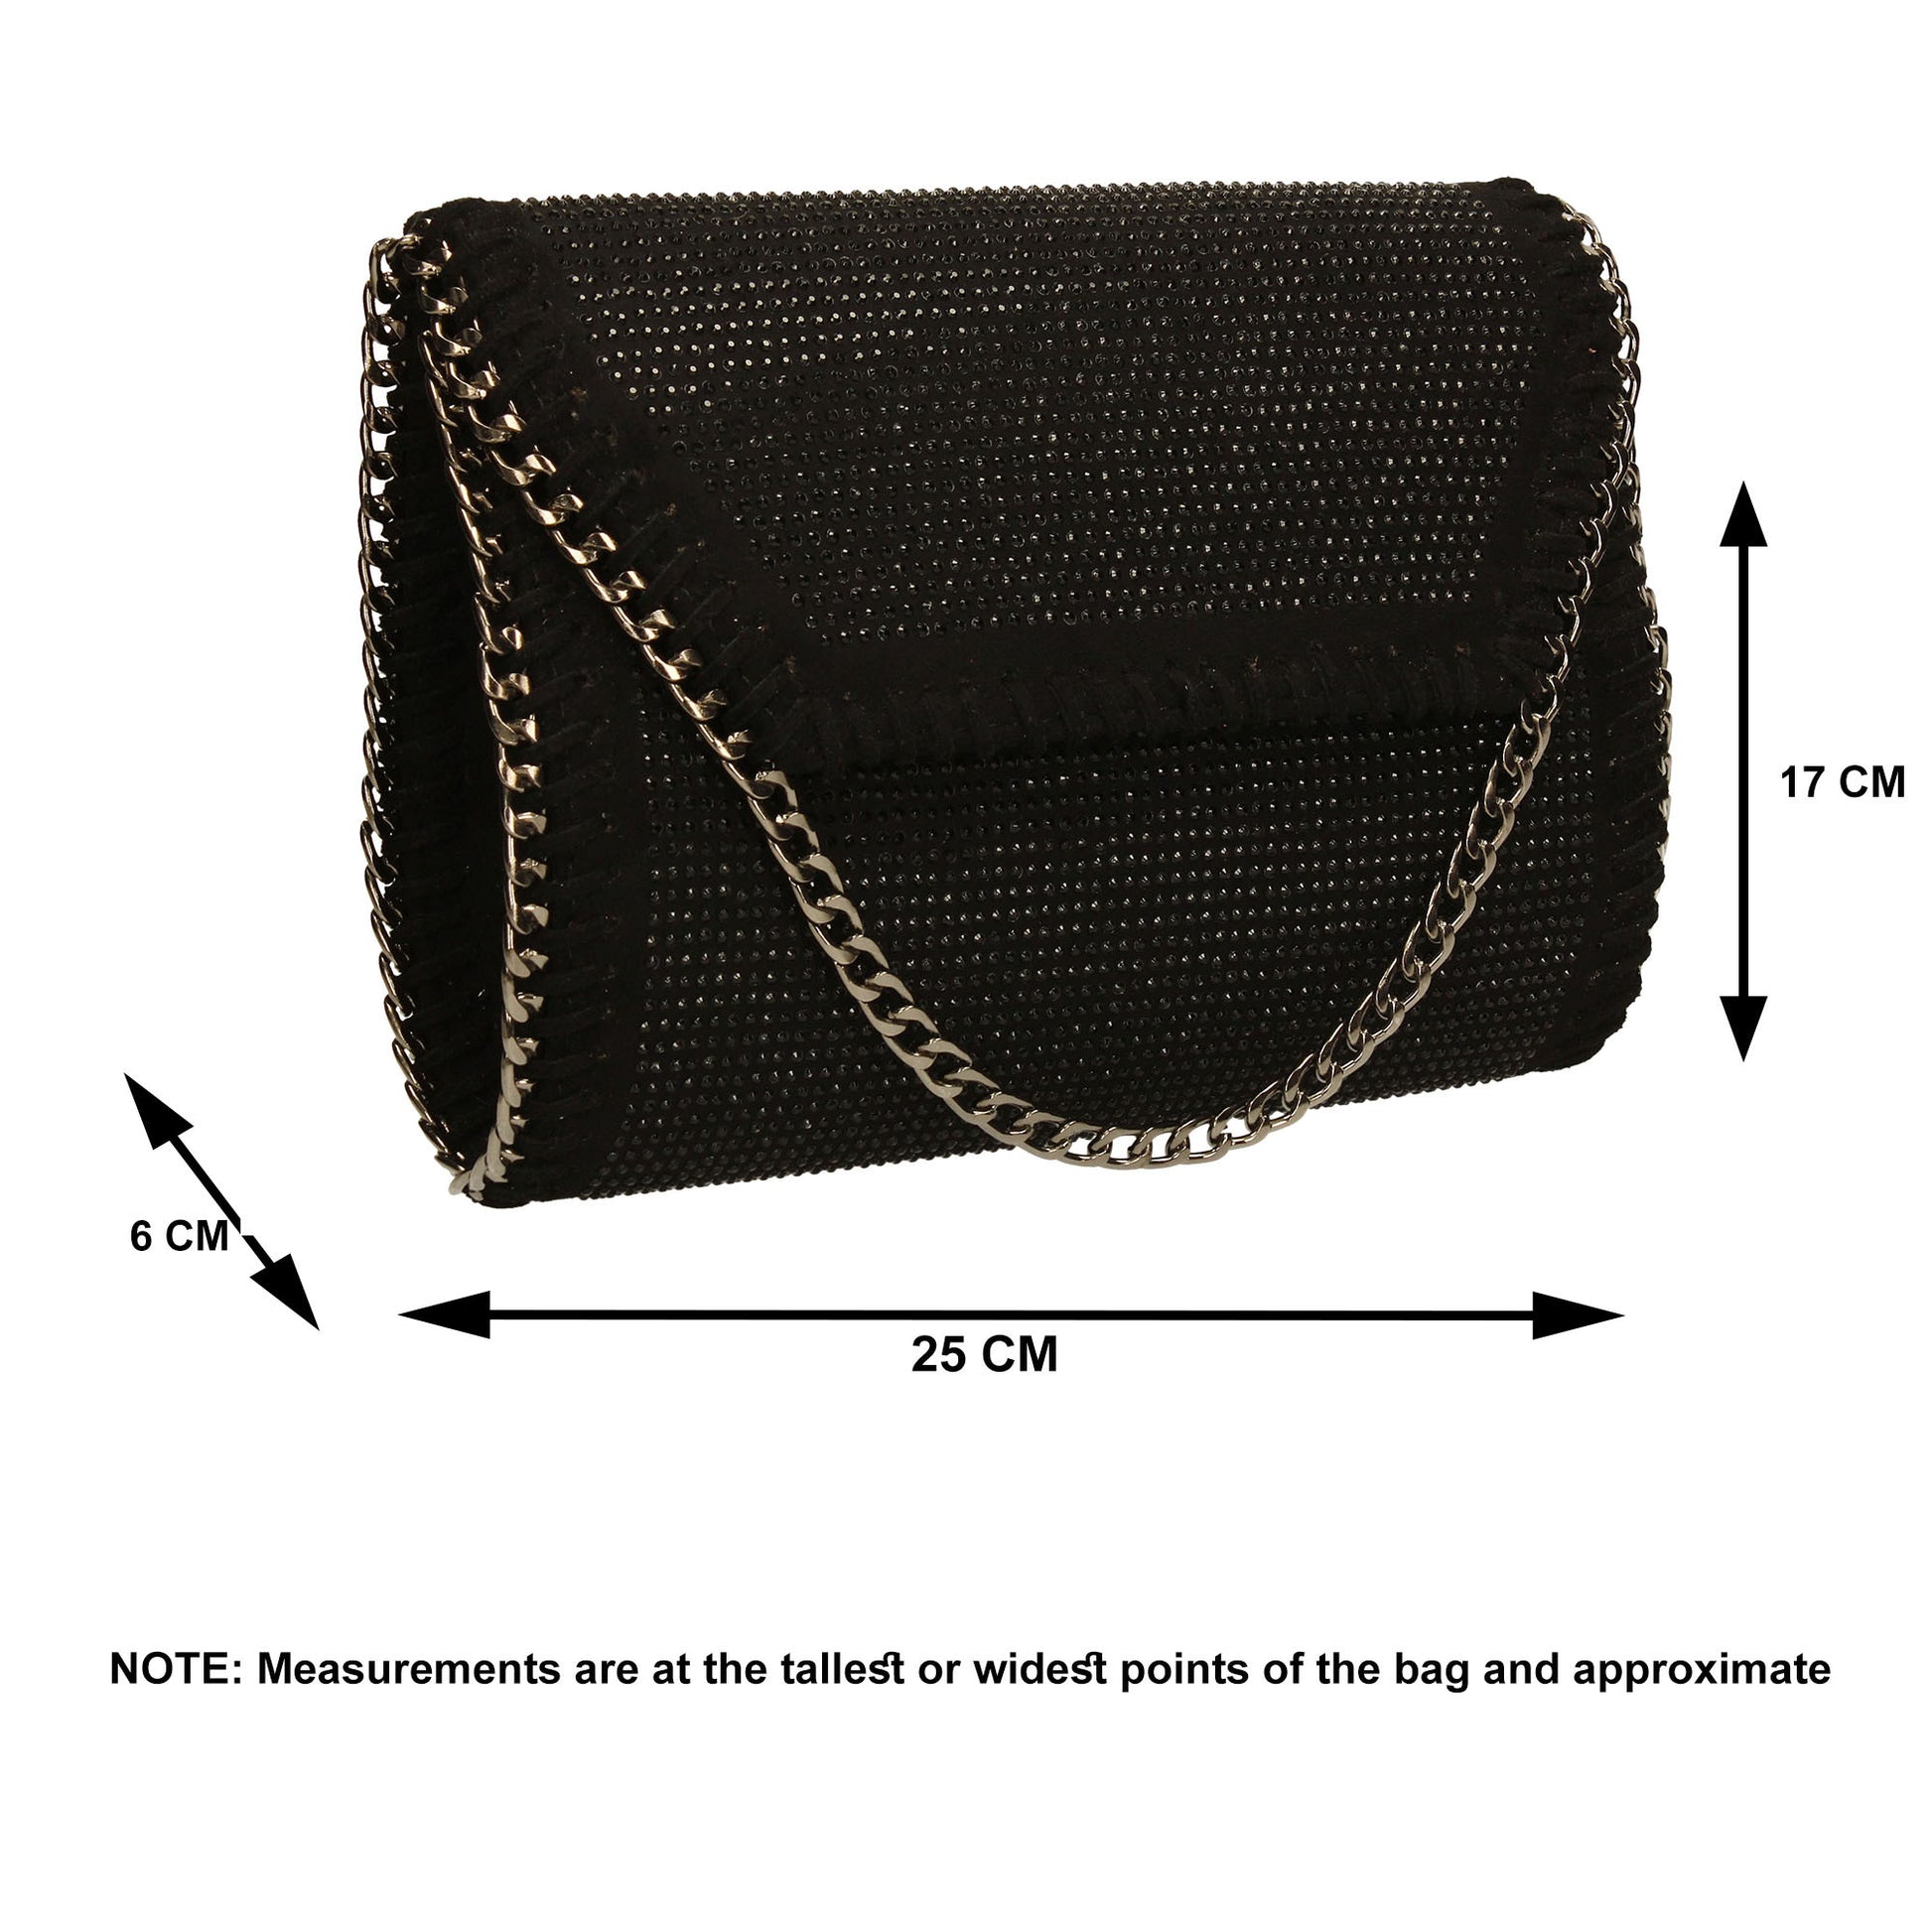 SWANKYSWANS Soi Diamante Clutch Bag Black Cute Cheap Clutch Bag For Weddings School and Work